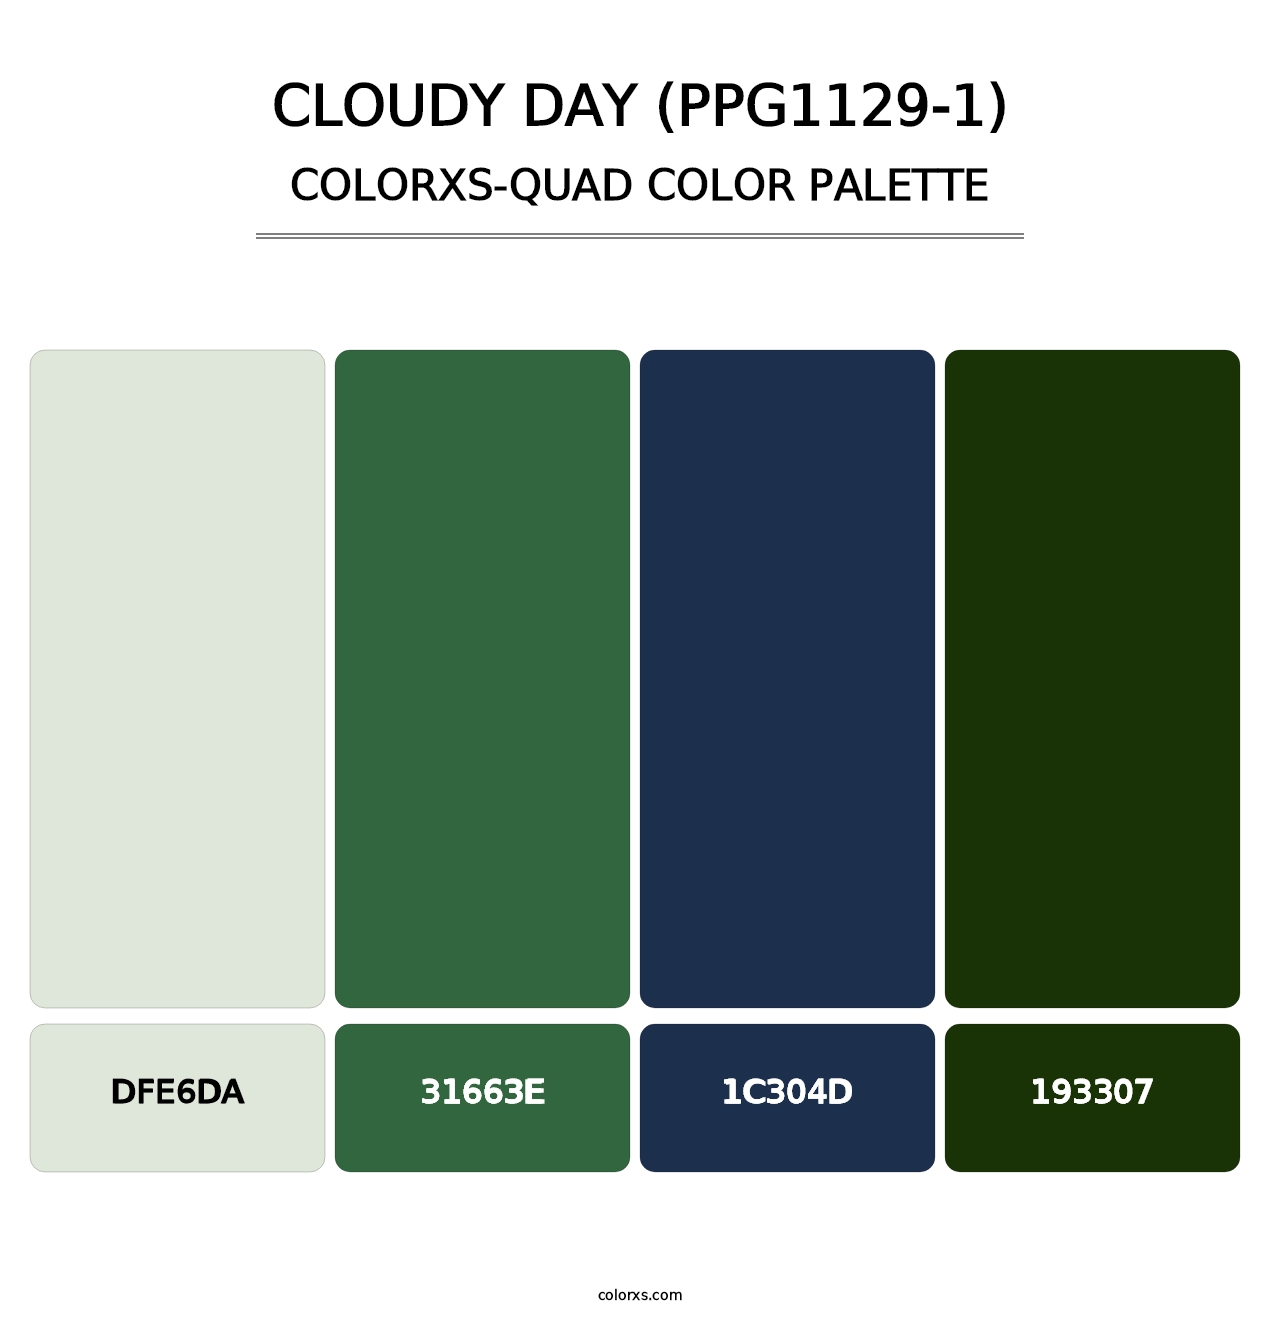 Cloudy Day (PPG1129-1) - Colorxs Quad Palette